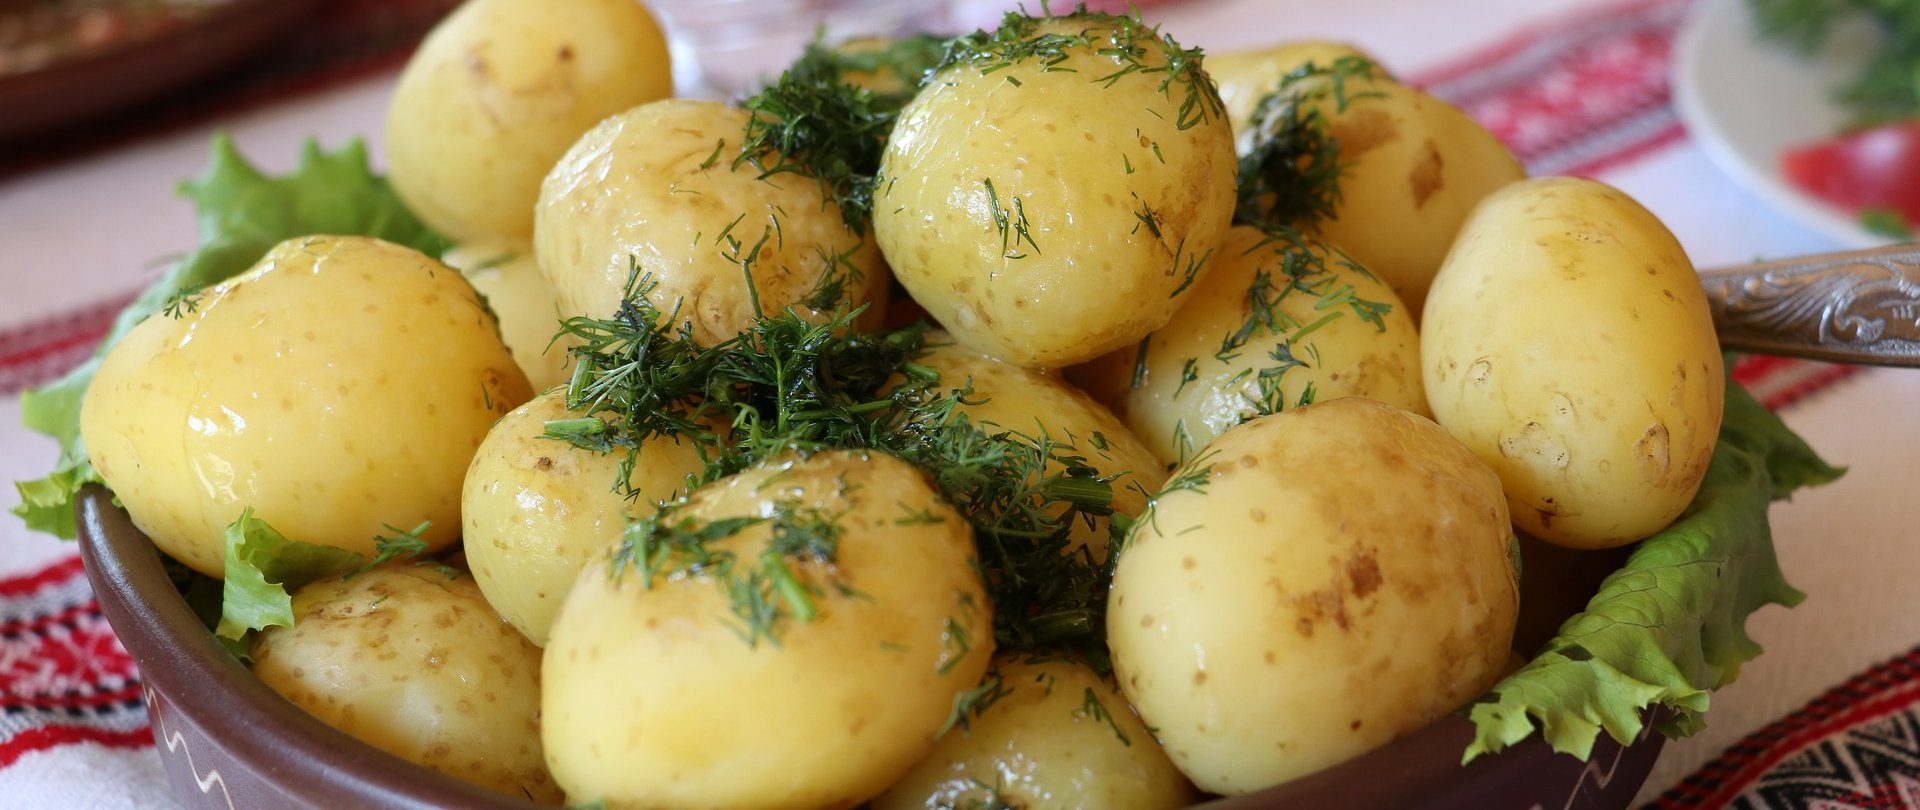 Festiwal ziemniaka